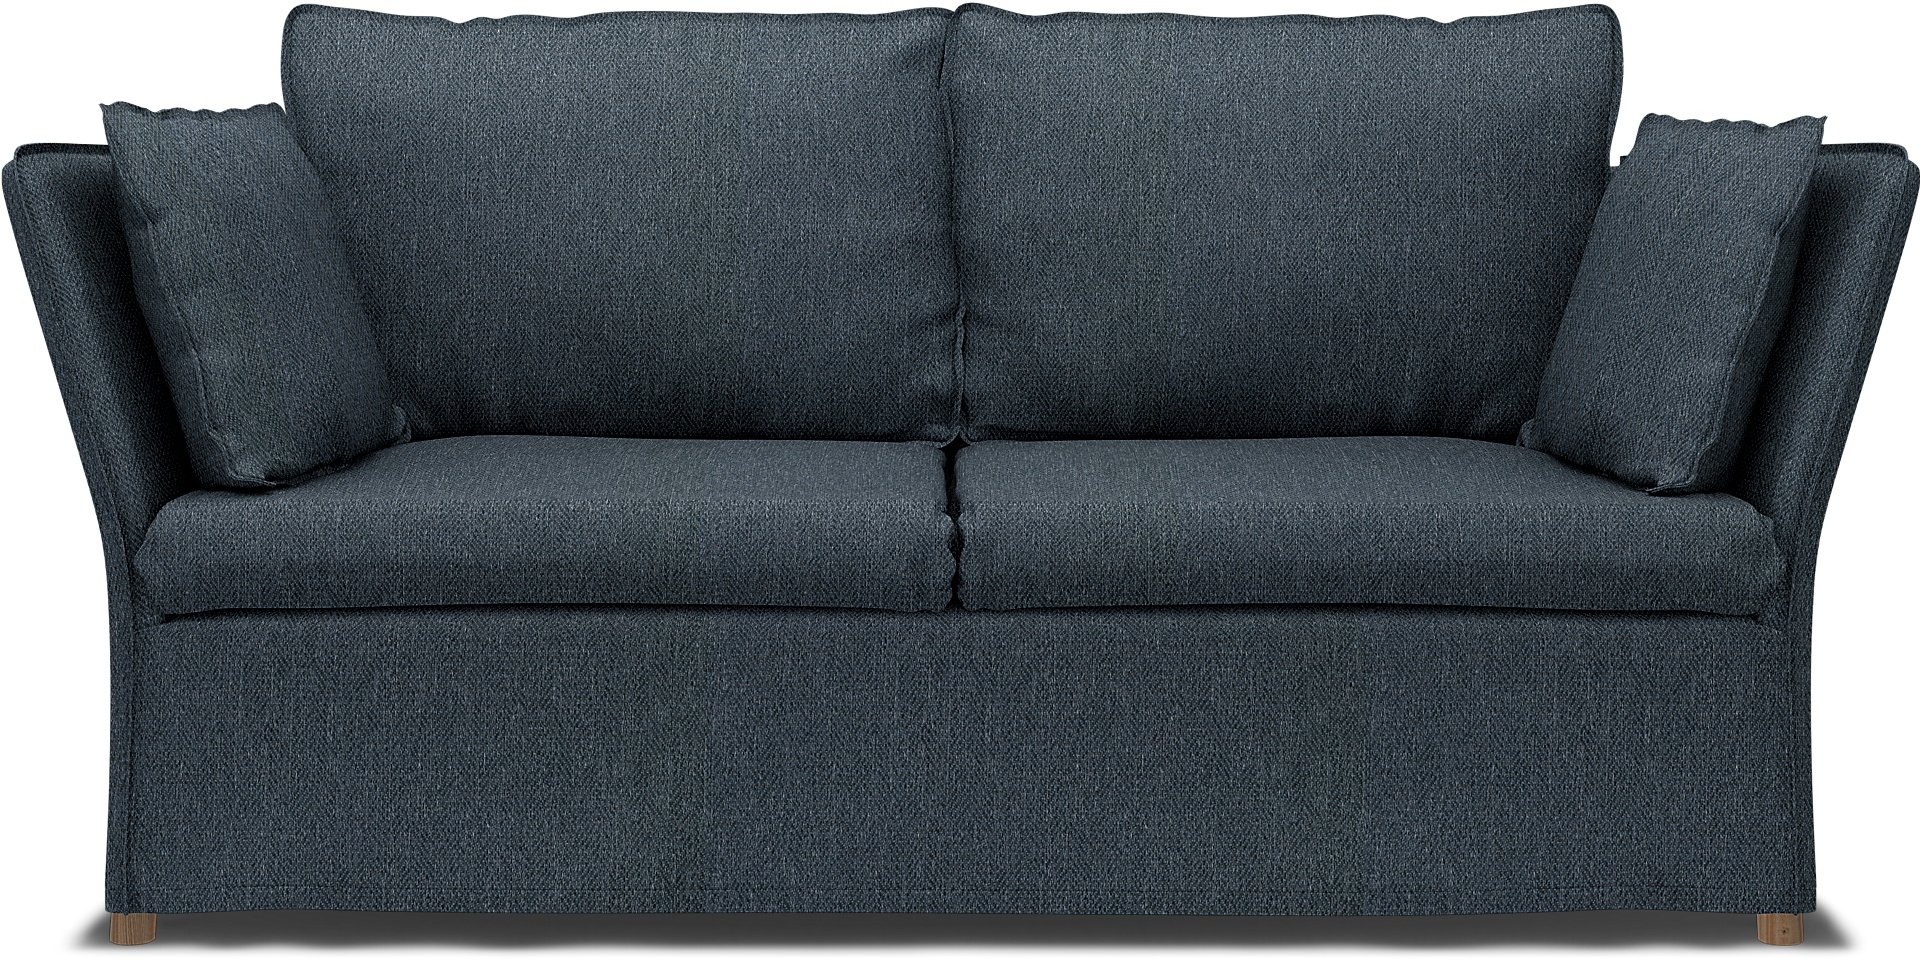 IKEA - Backsalen 2 seater sofa, Denim, Boucle & Texture - Bemz